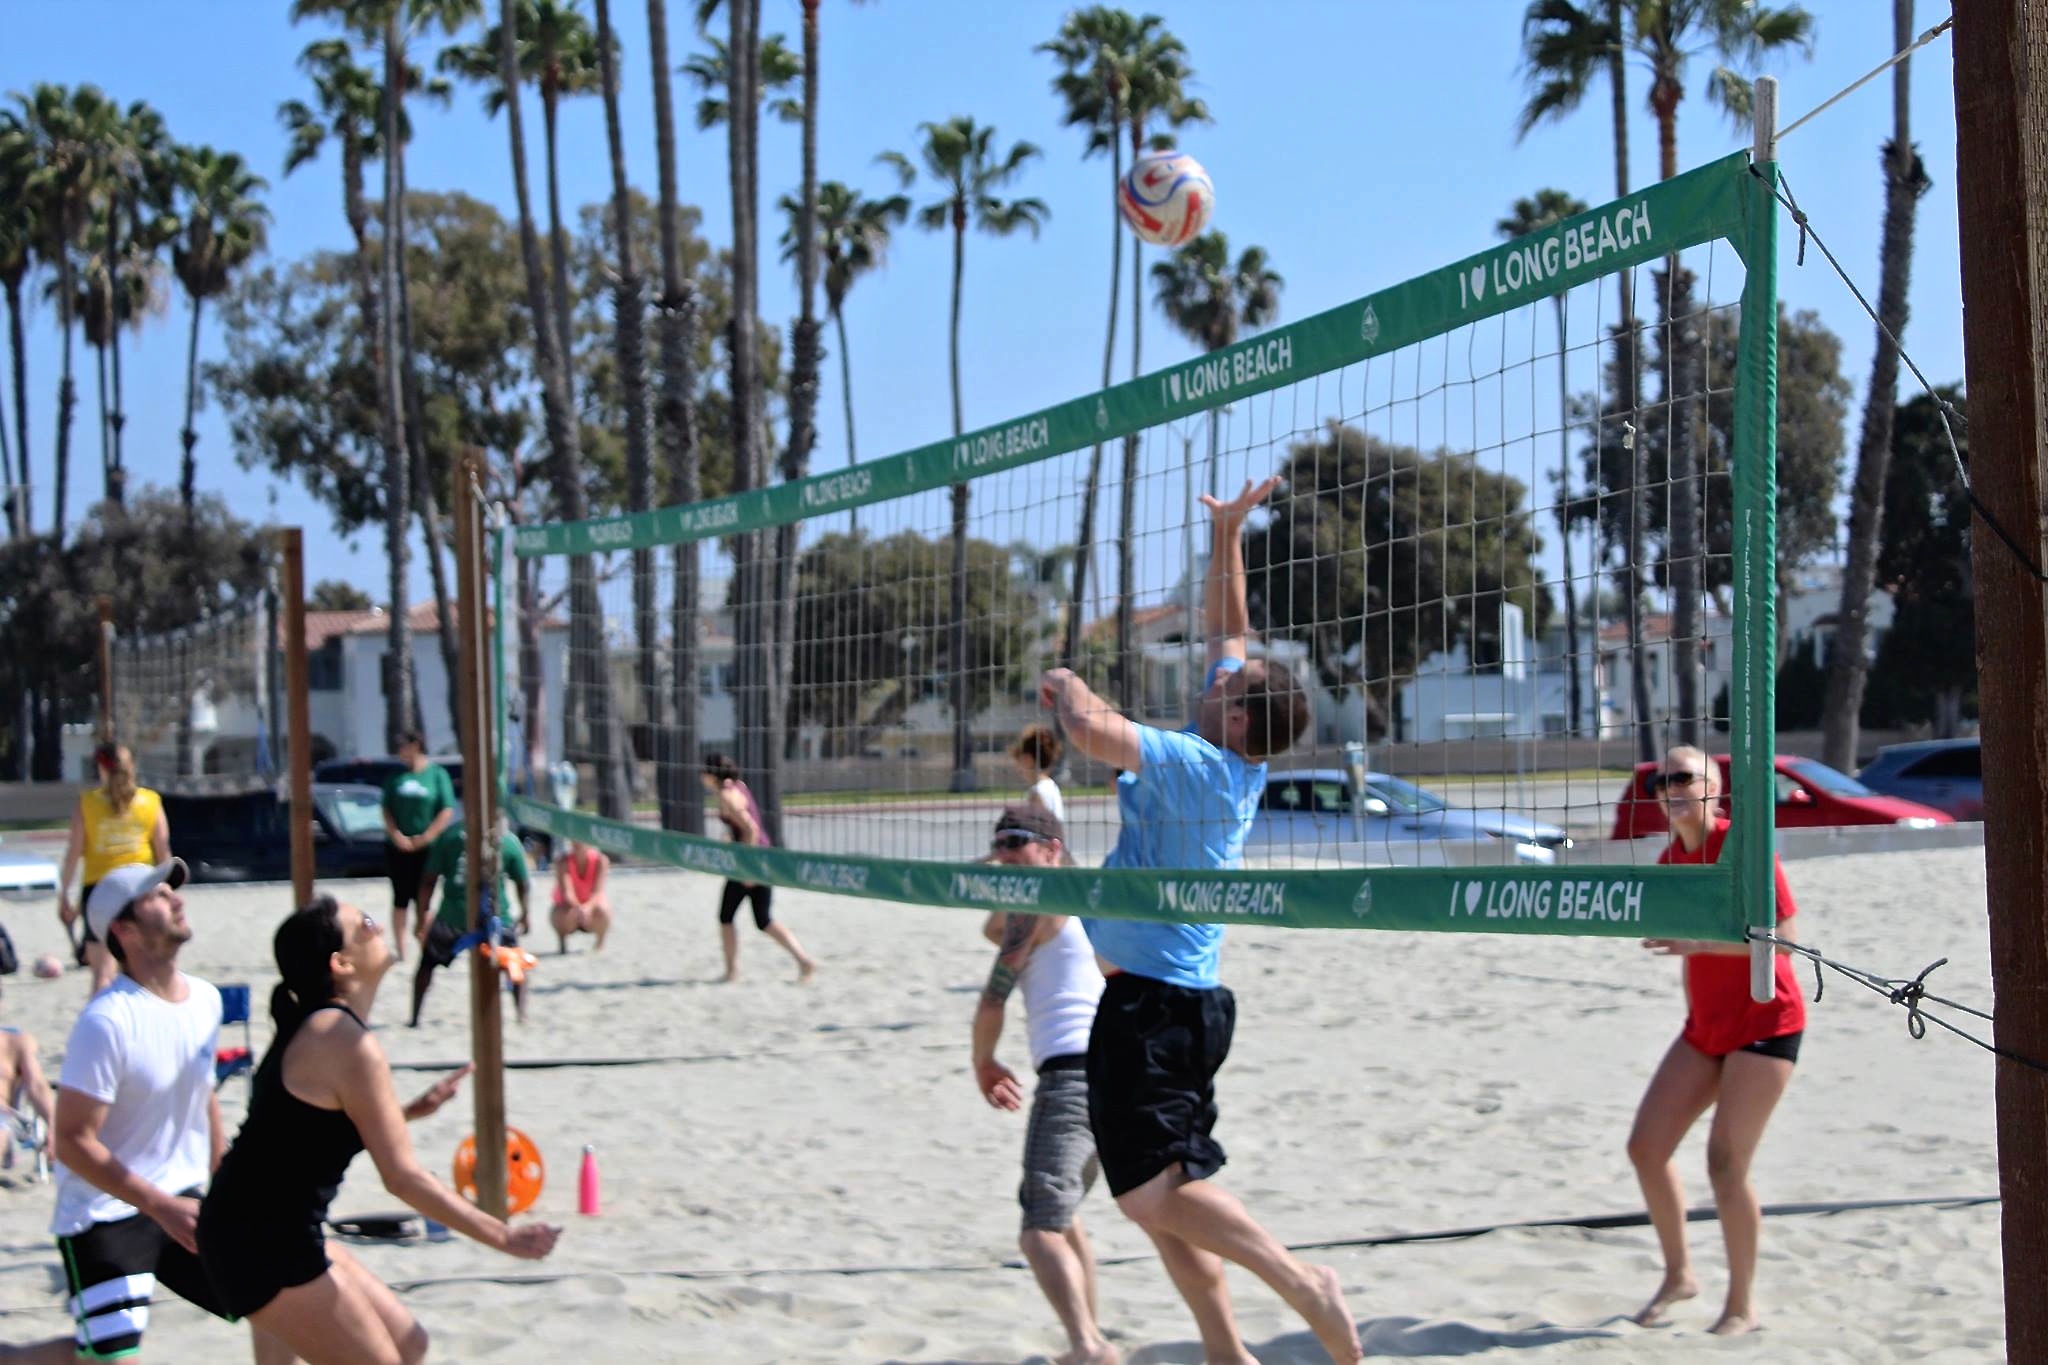 Coed 4s Beach Volleyball Tournament Love Long Beach Festival 2016 9560